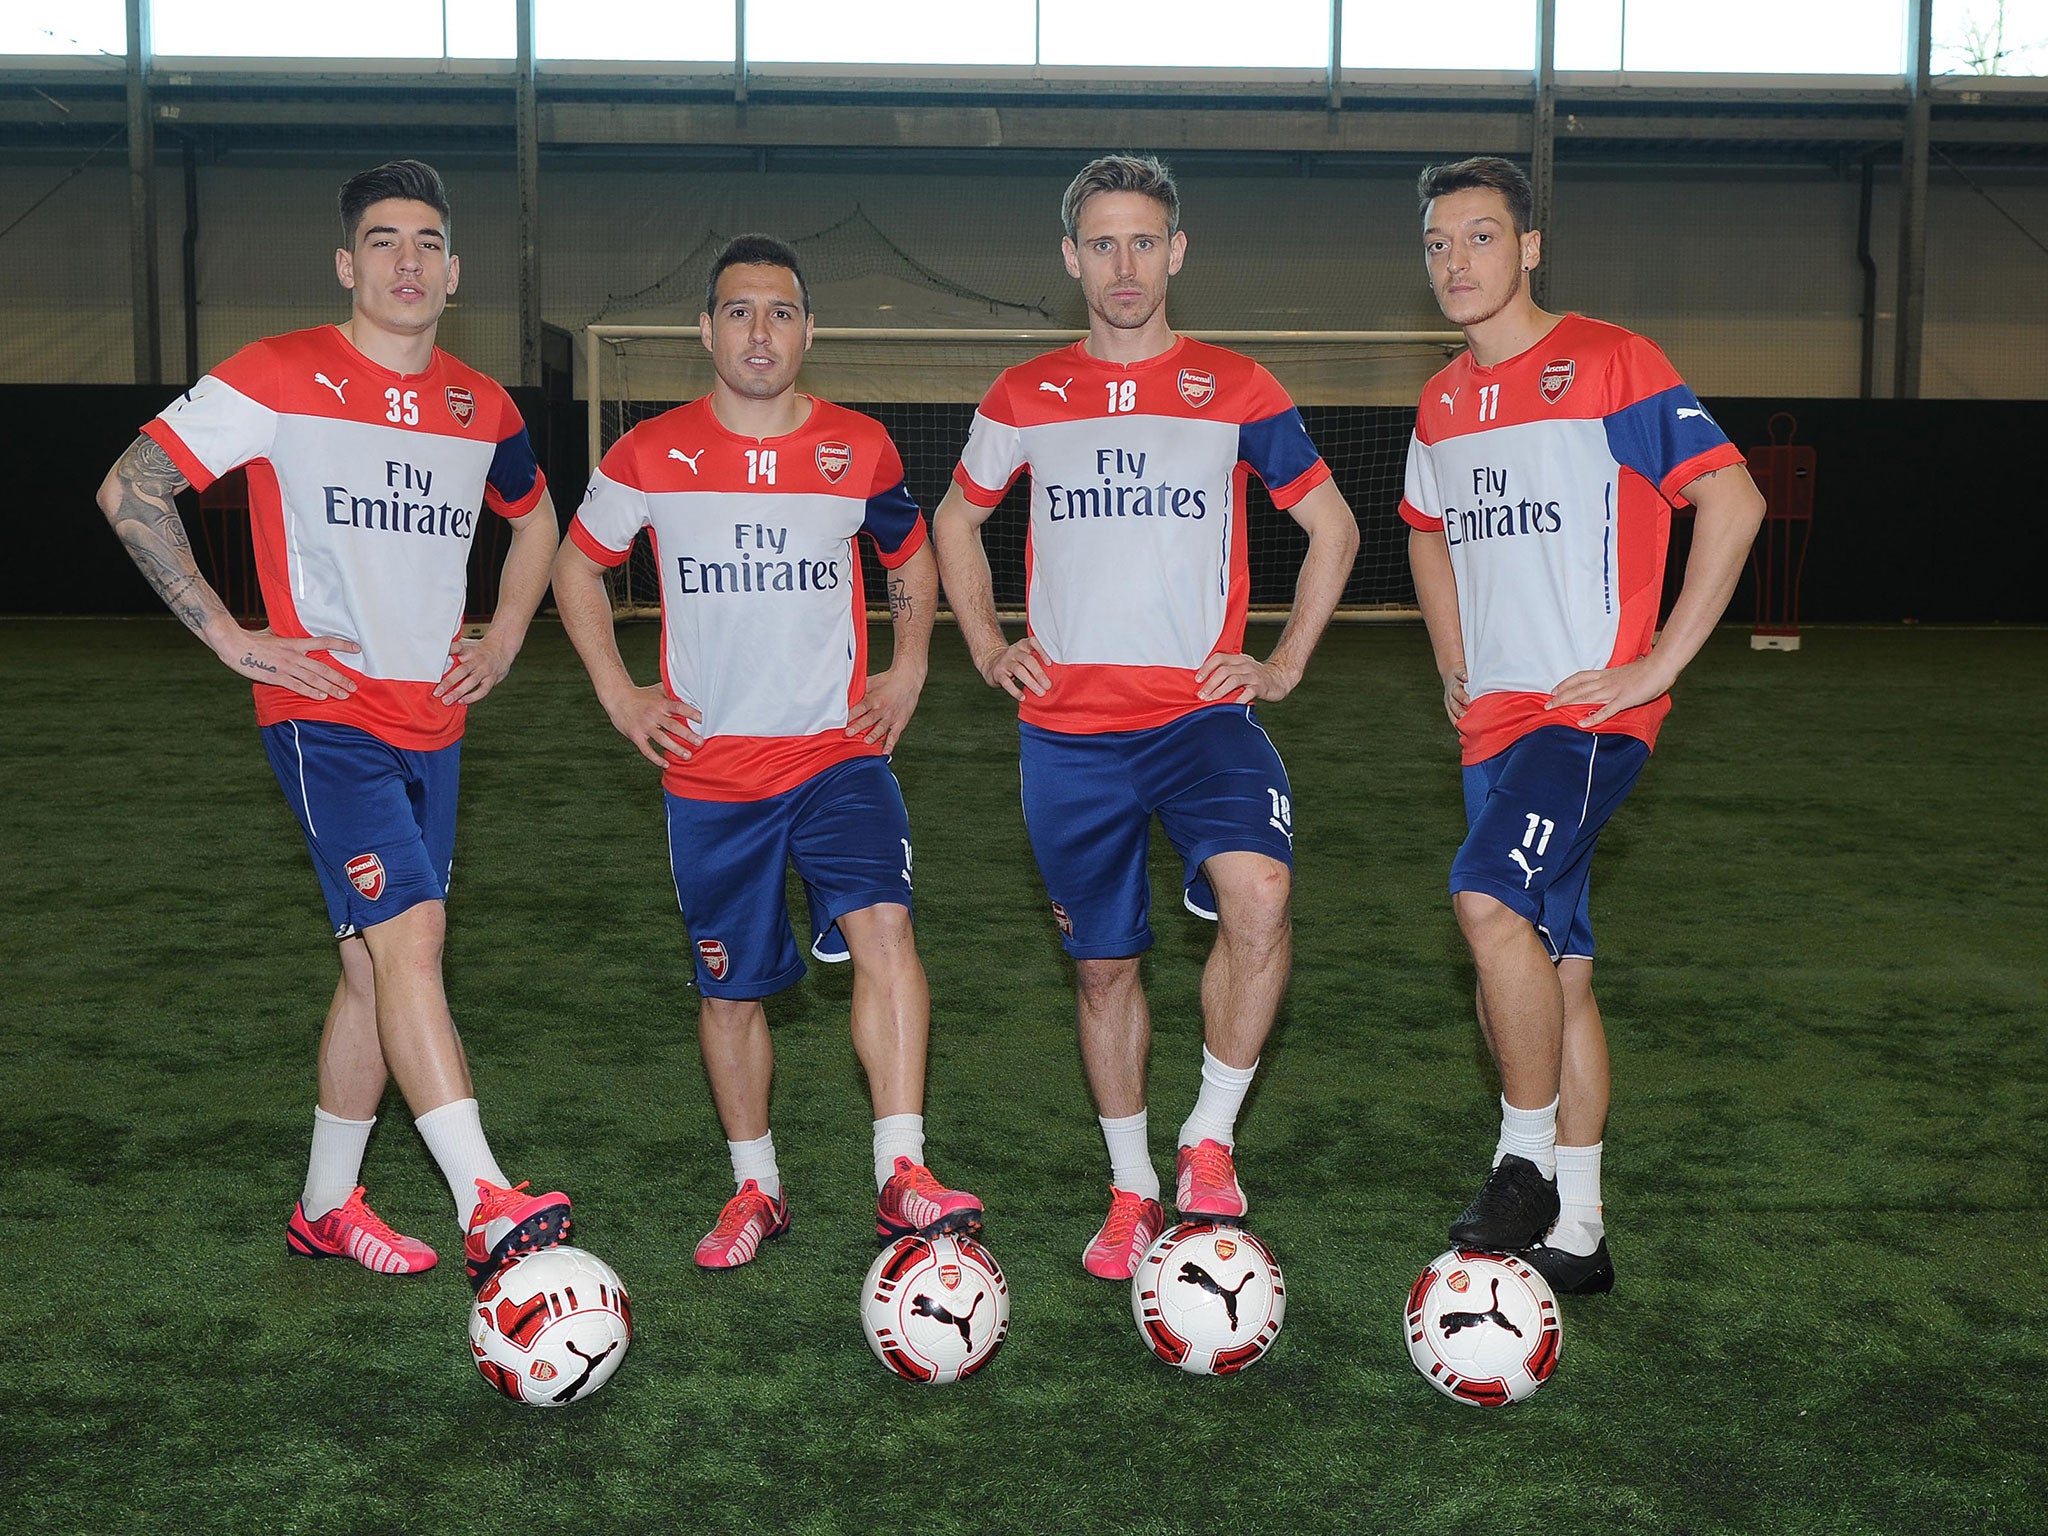 Arsenal players Hector Bellerin, Santi Cazorla, Nacho Monreal and Mesut Ozil and their new Puma football